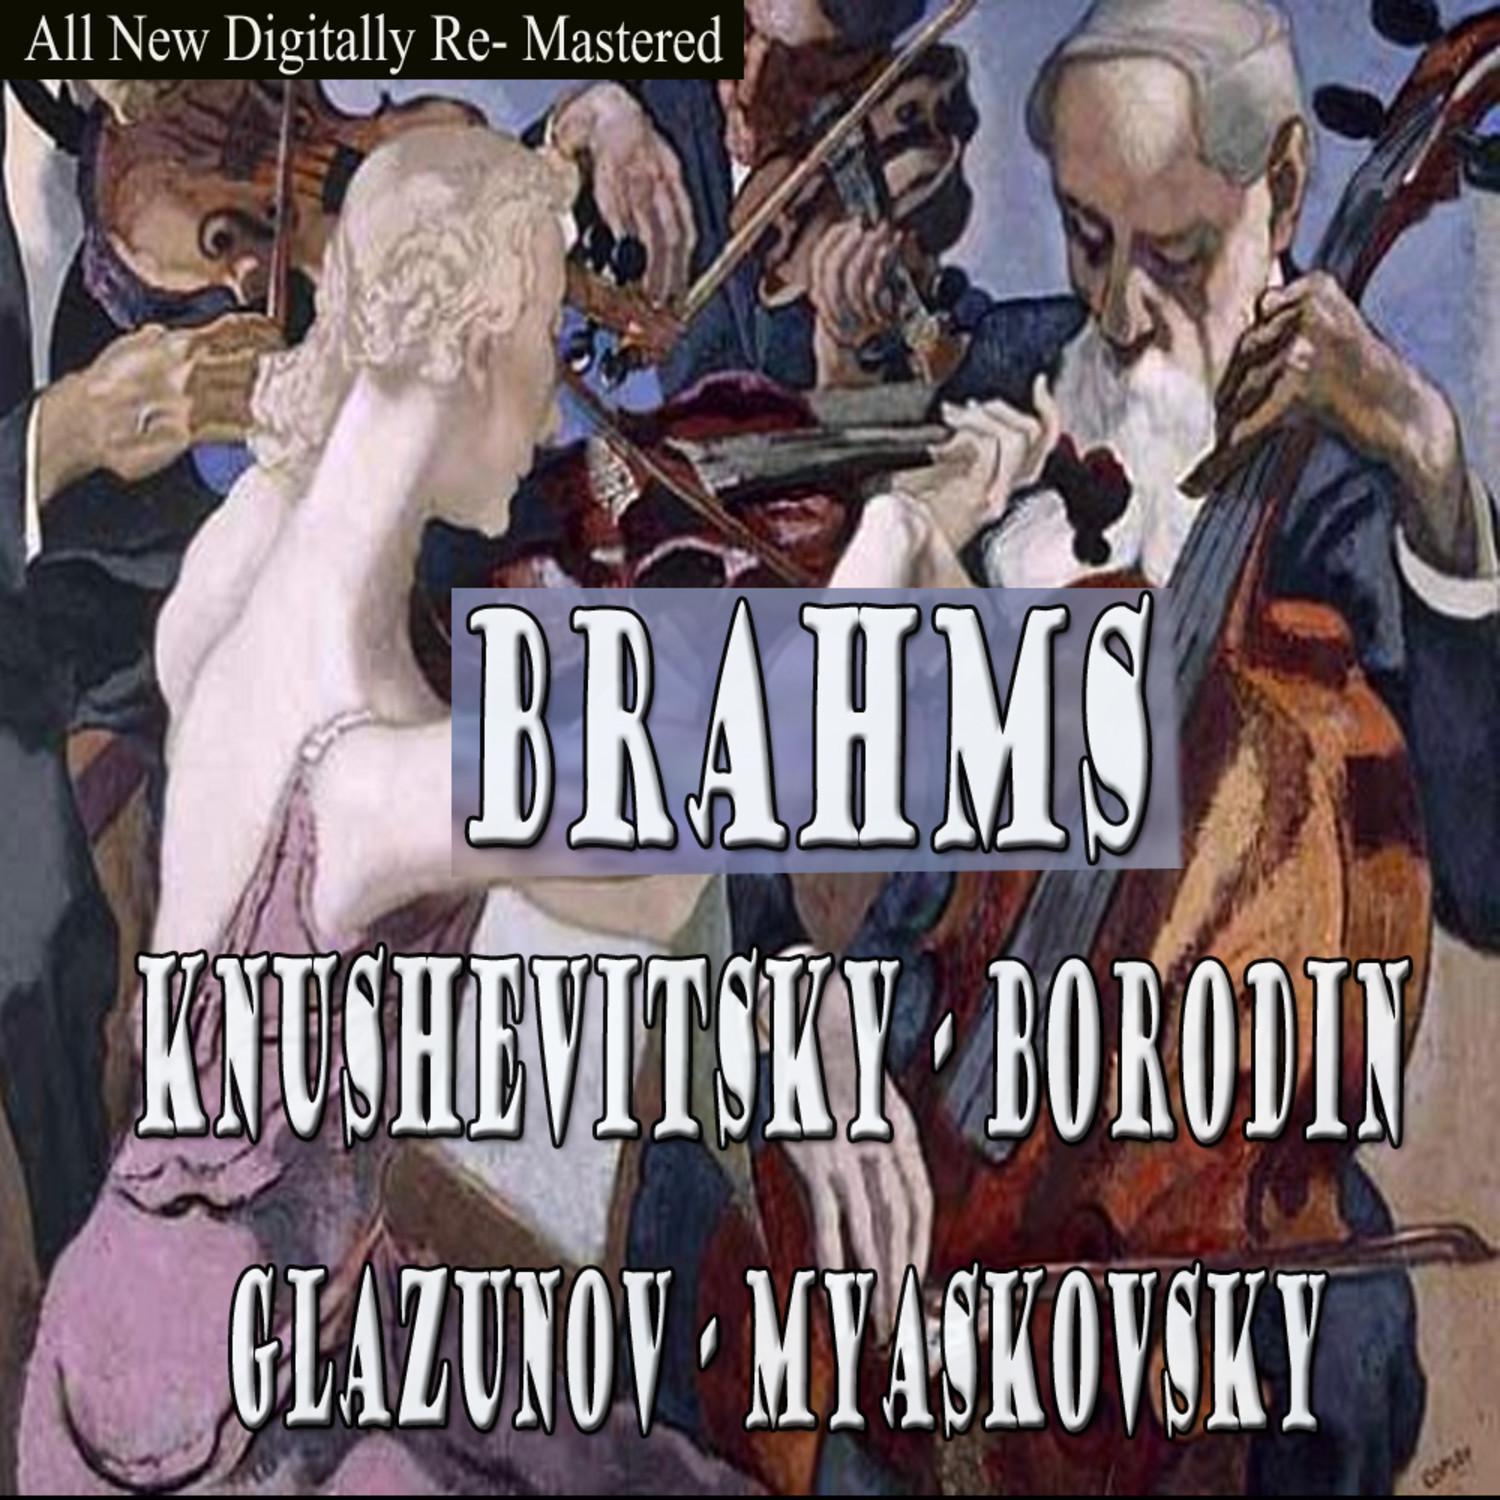 Brahms, Borodin, Glazunov, Myaskovsky - Knushevitsky